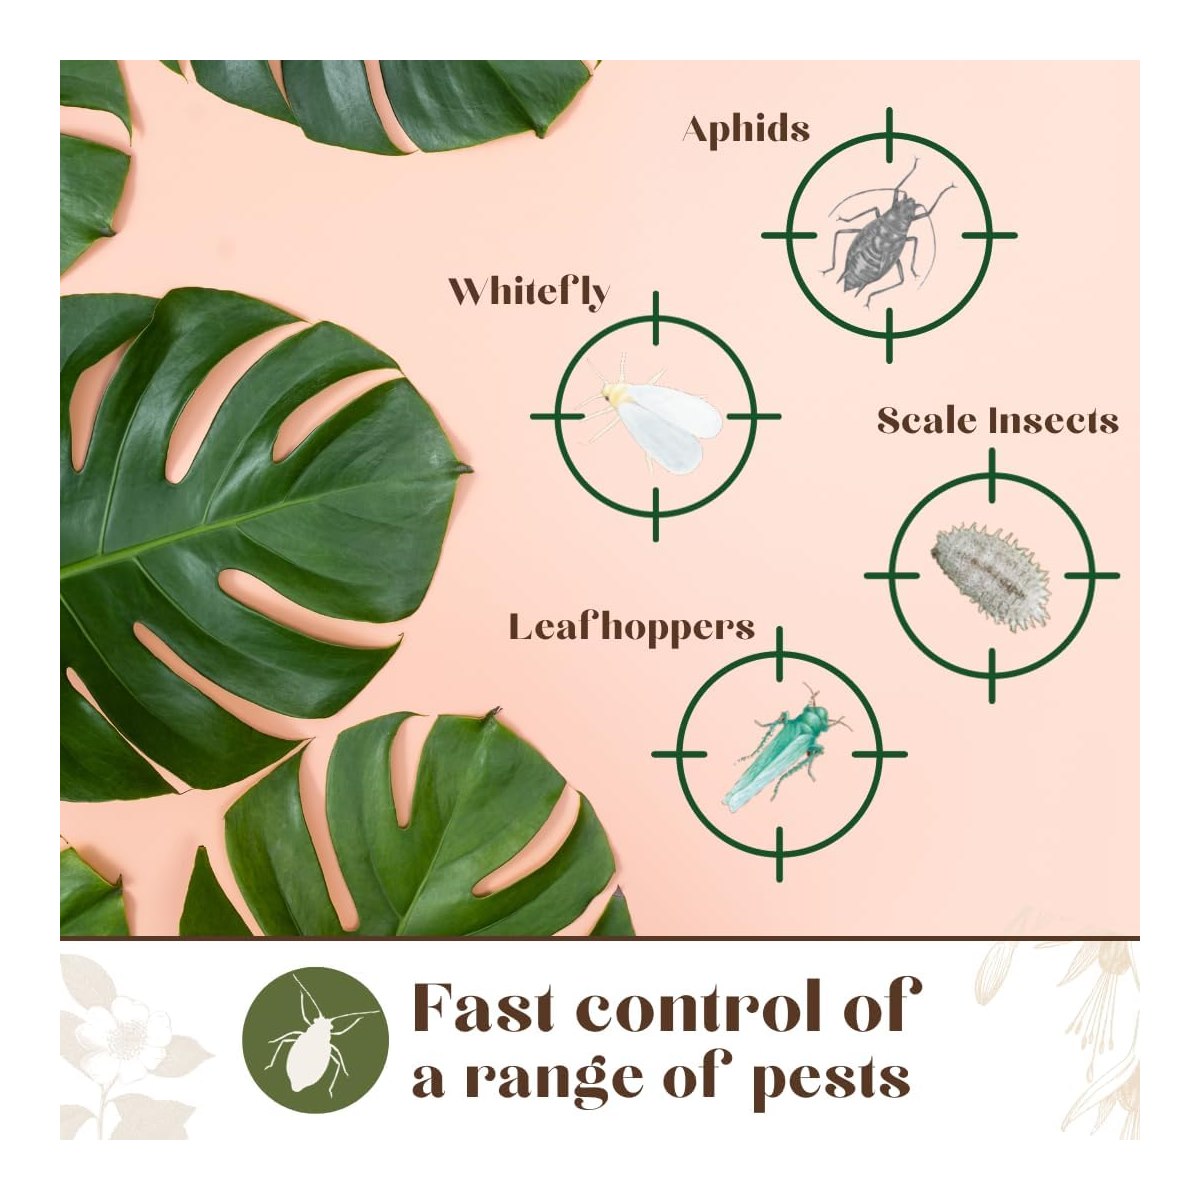 Houseplant pest control spray